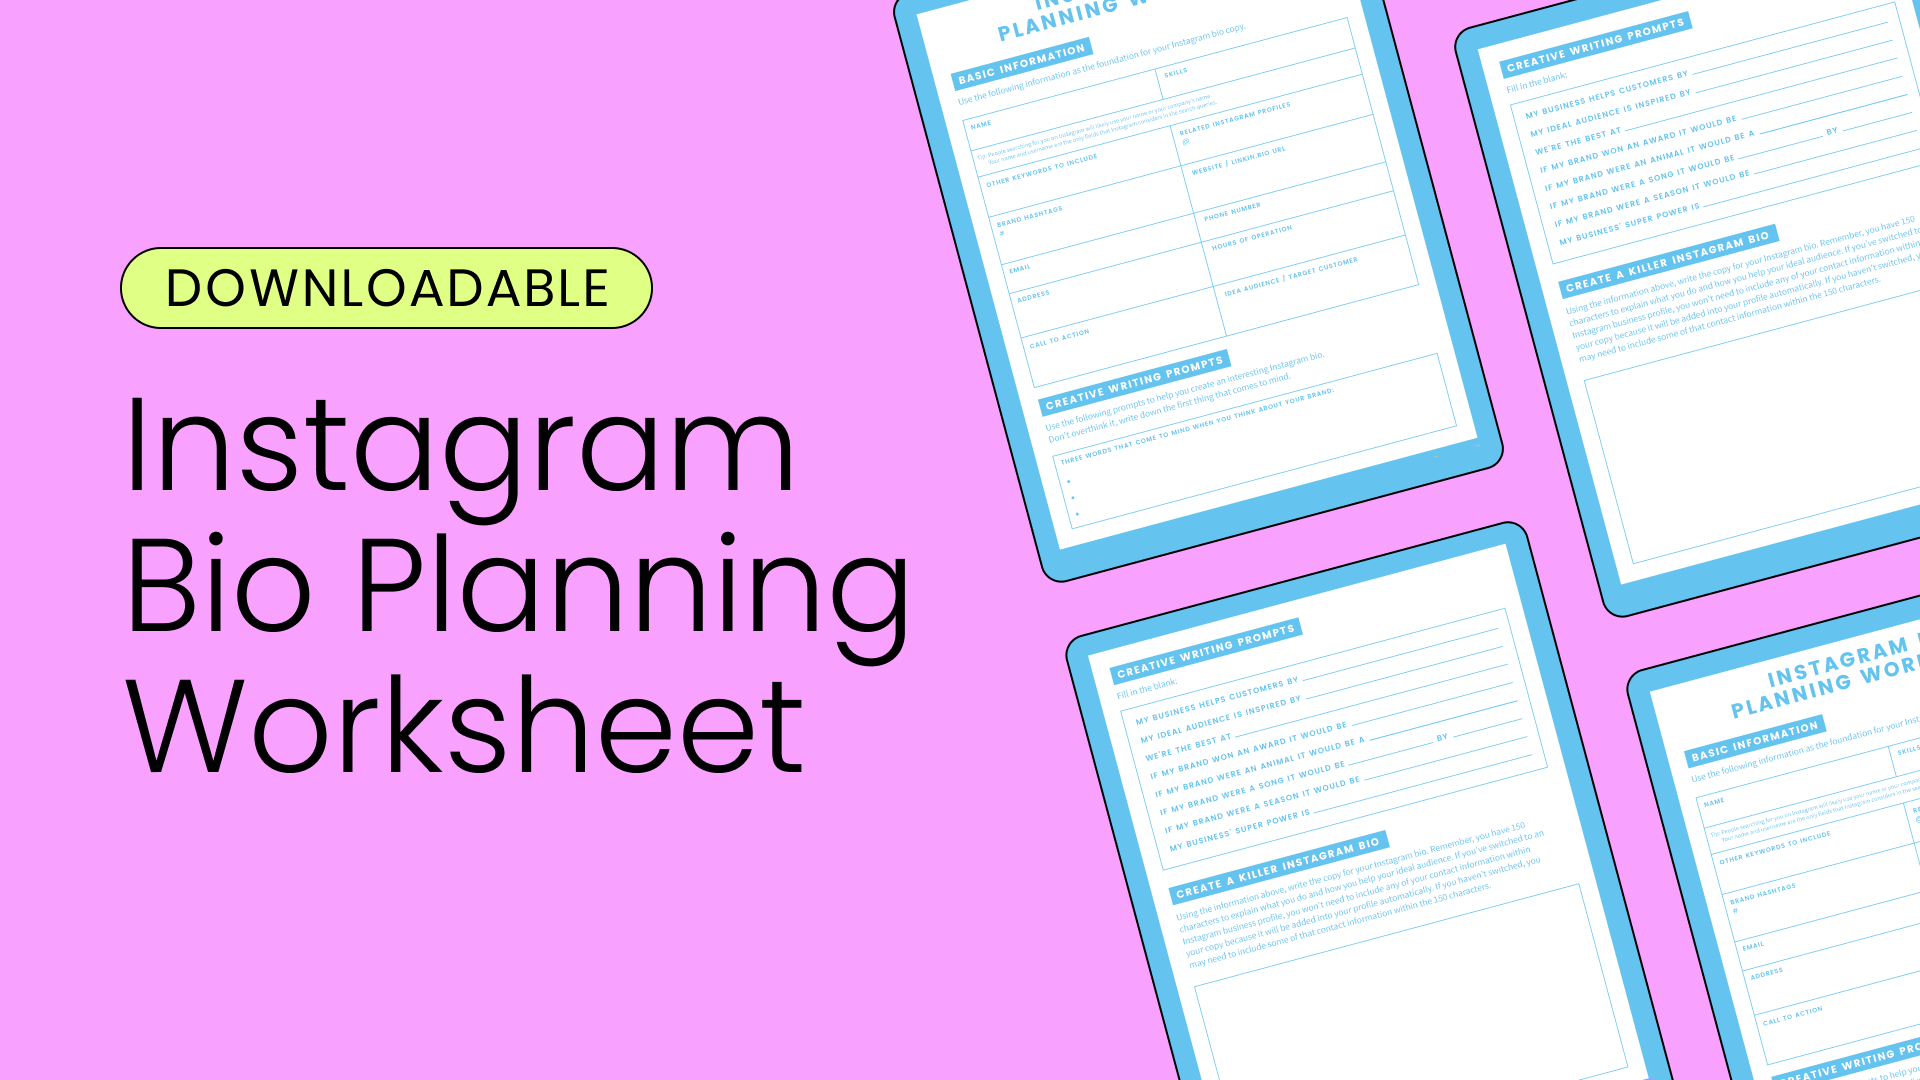 Image reading Downloadable Instagram Bio Planning Worksheet with decorative image of worksheet